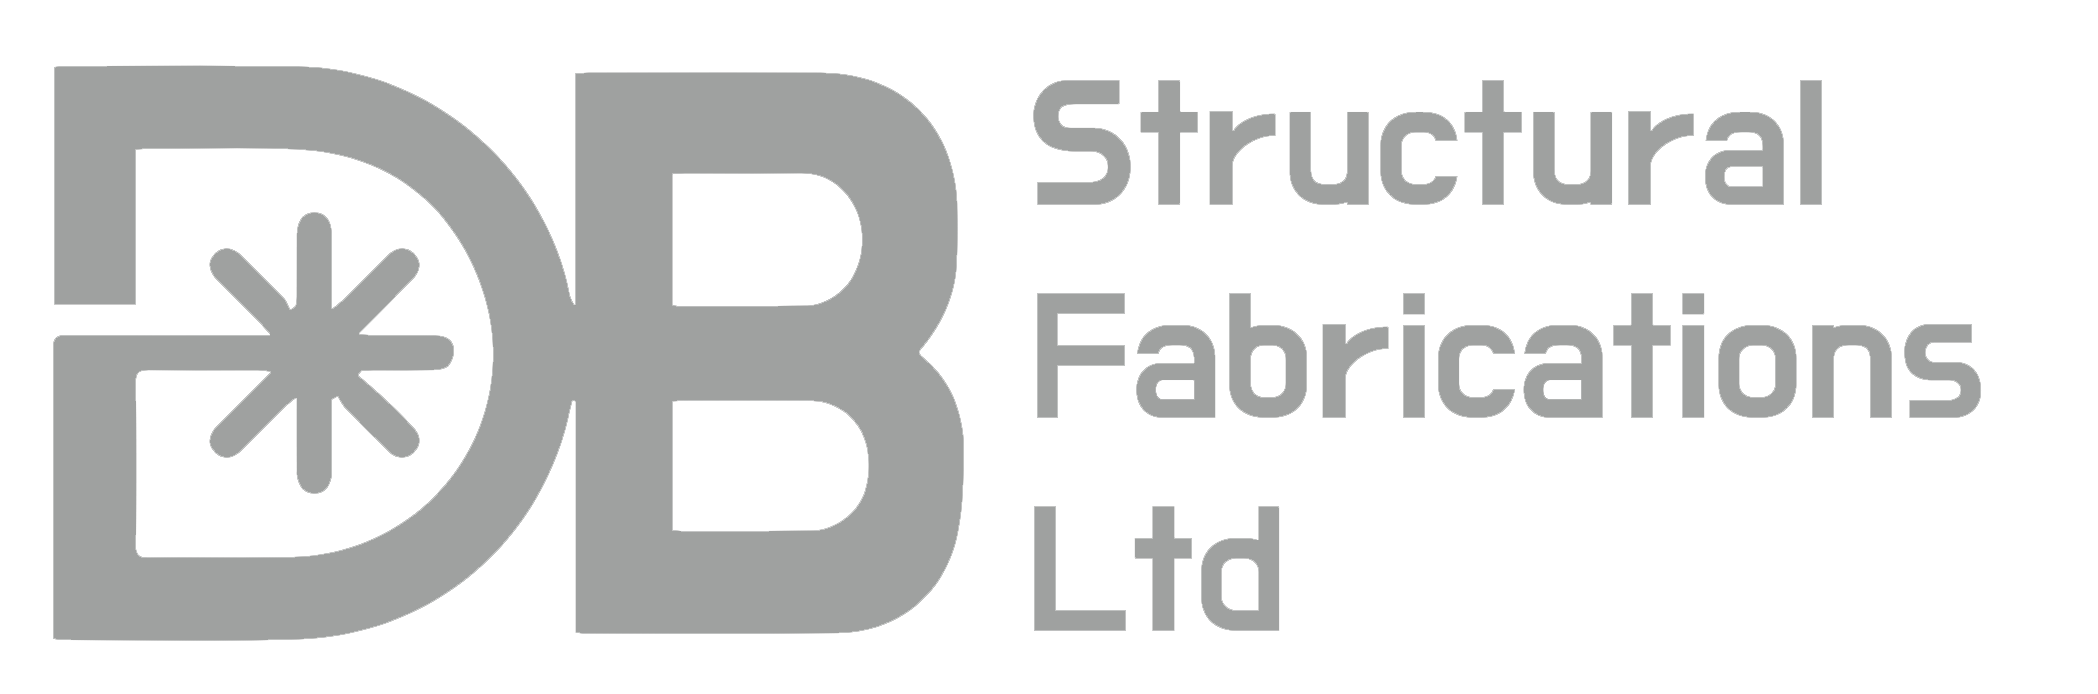 DB Structural Fabrications Ltd Logo in Grey